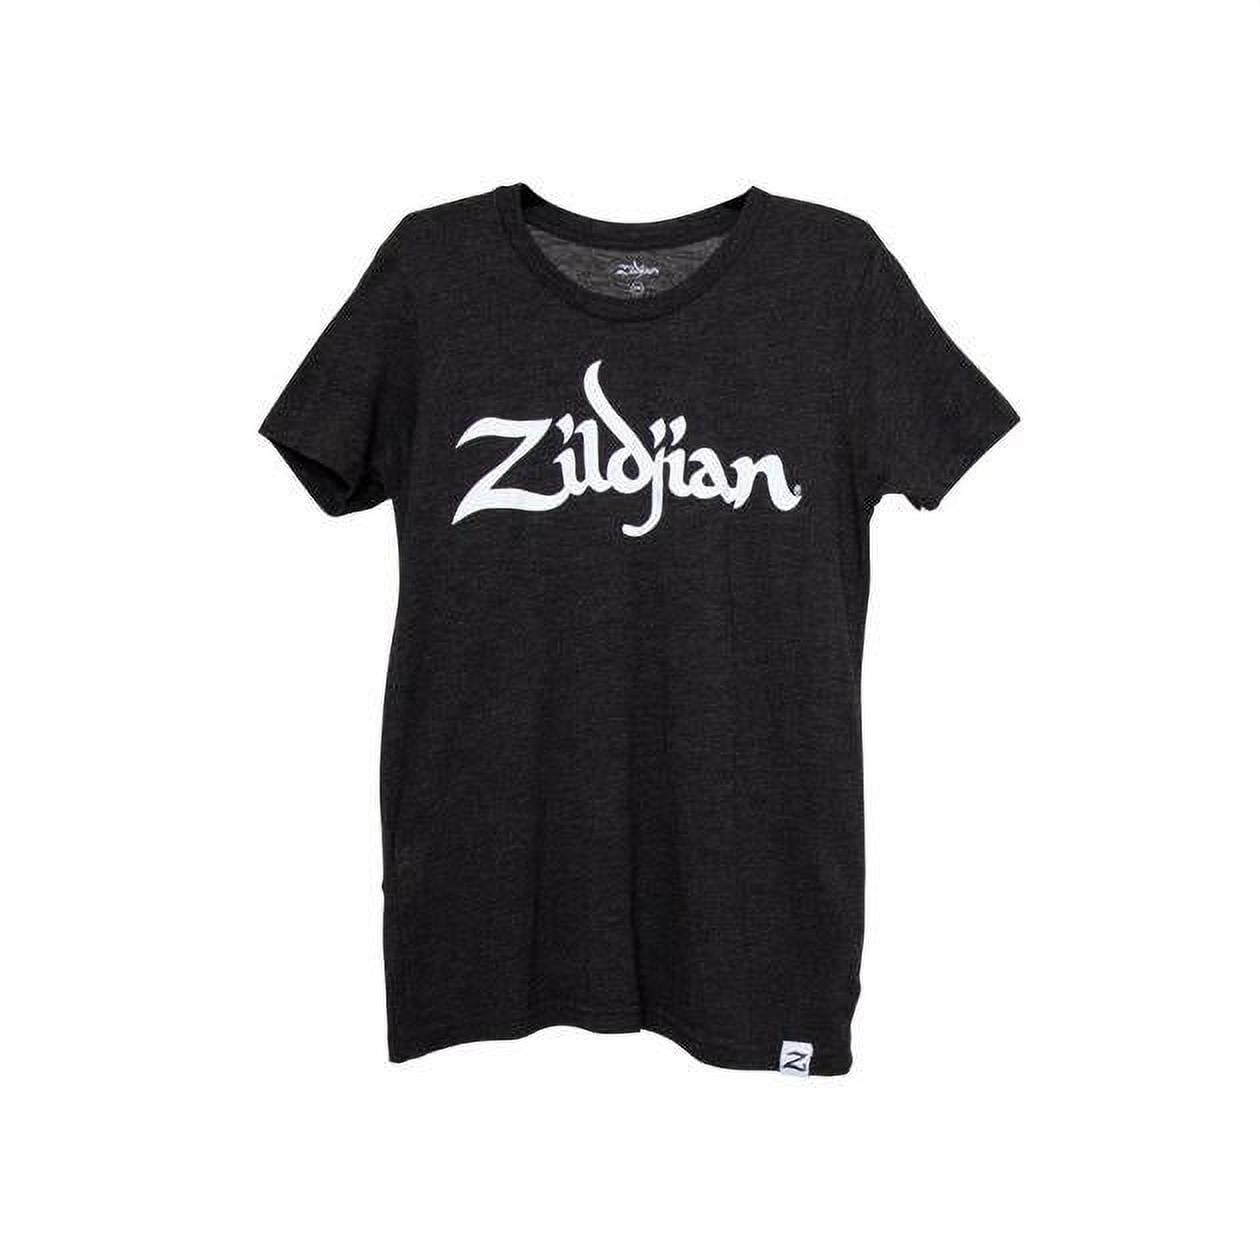 Zildjian Men's Black Tshirt Tees Clothing 